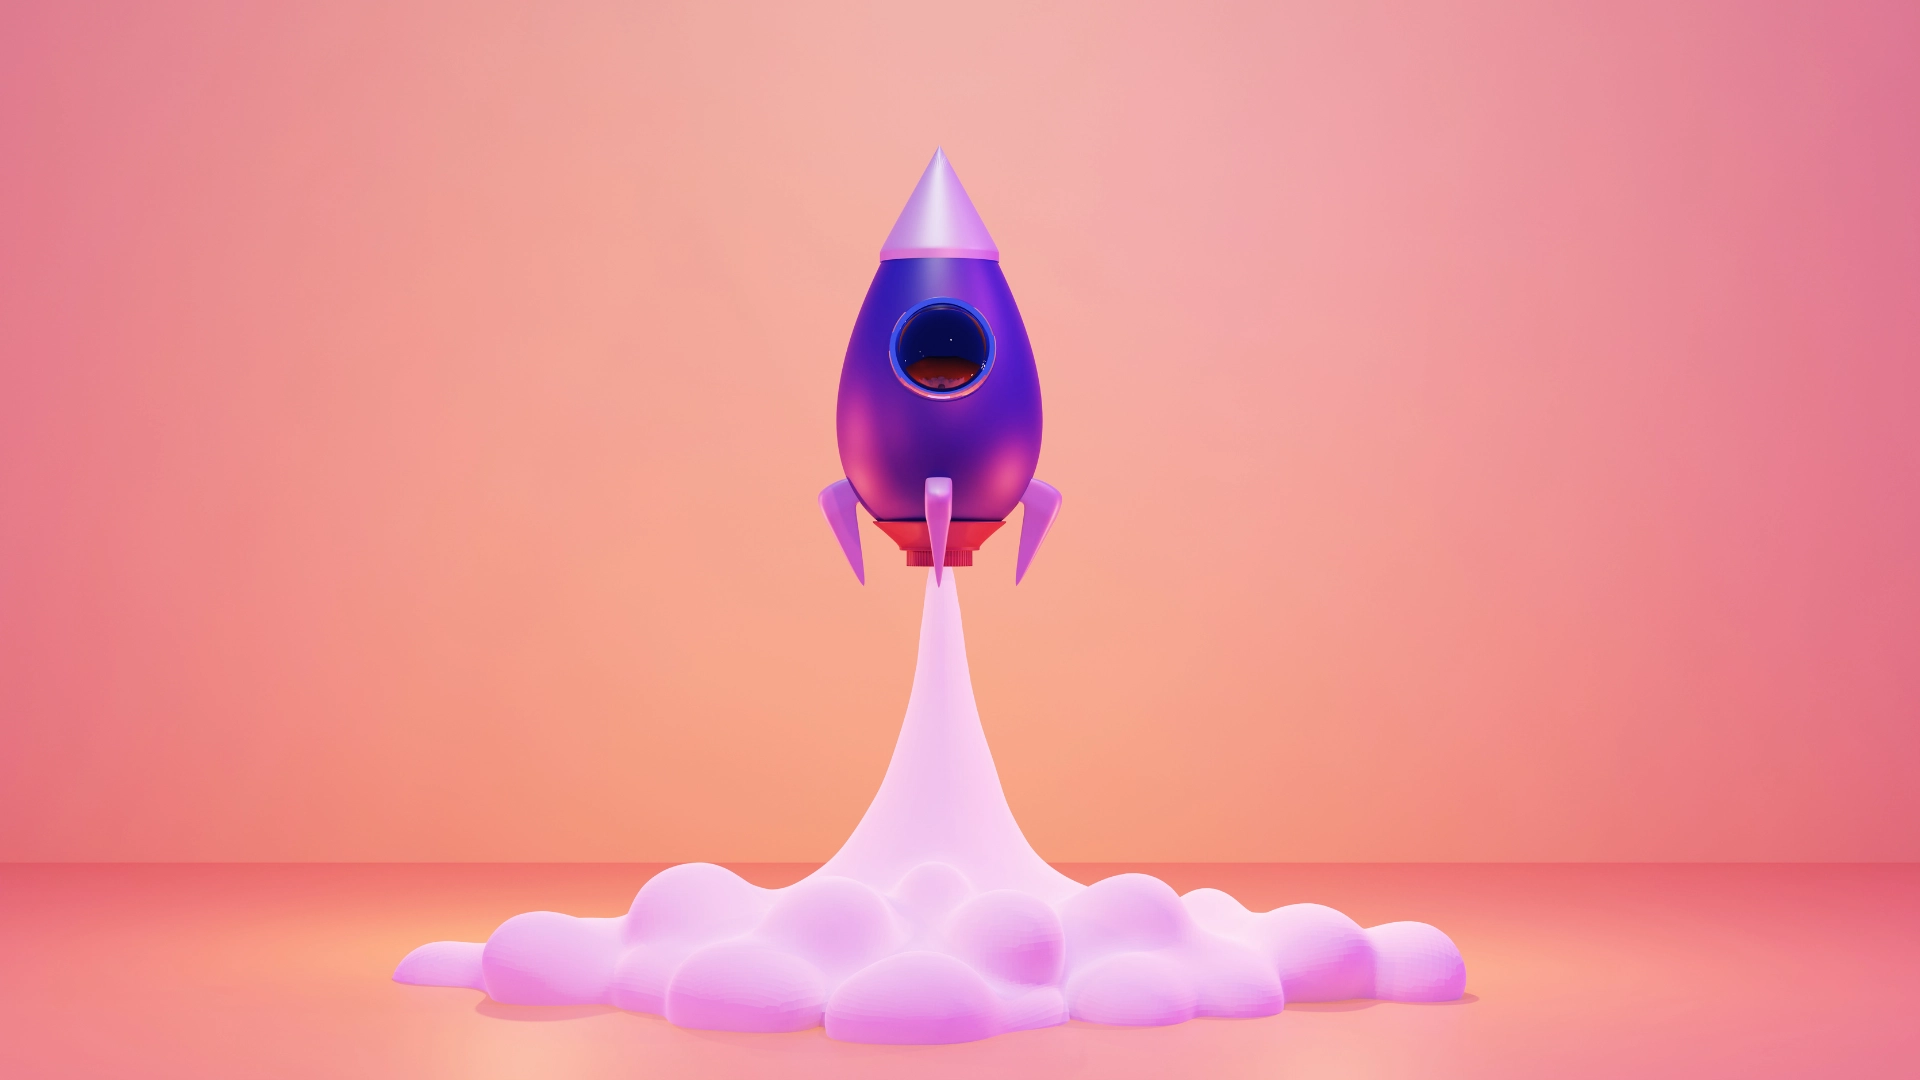 3D rocket on a pink background, taking off